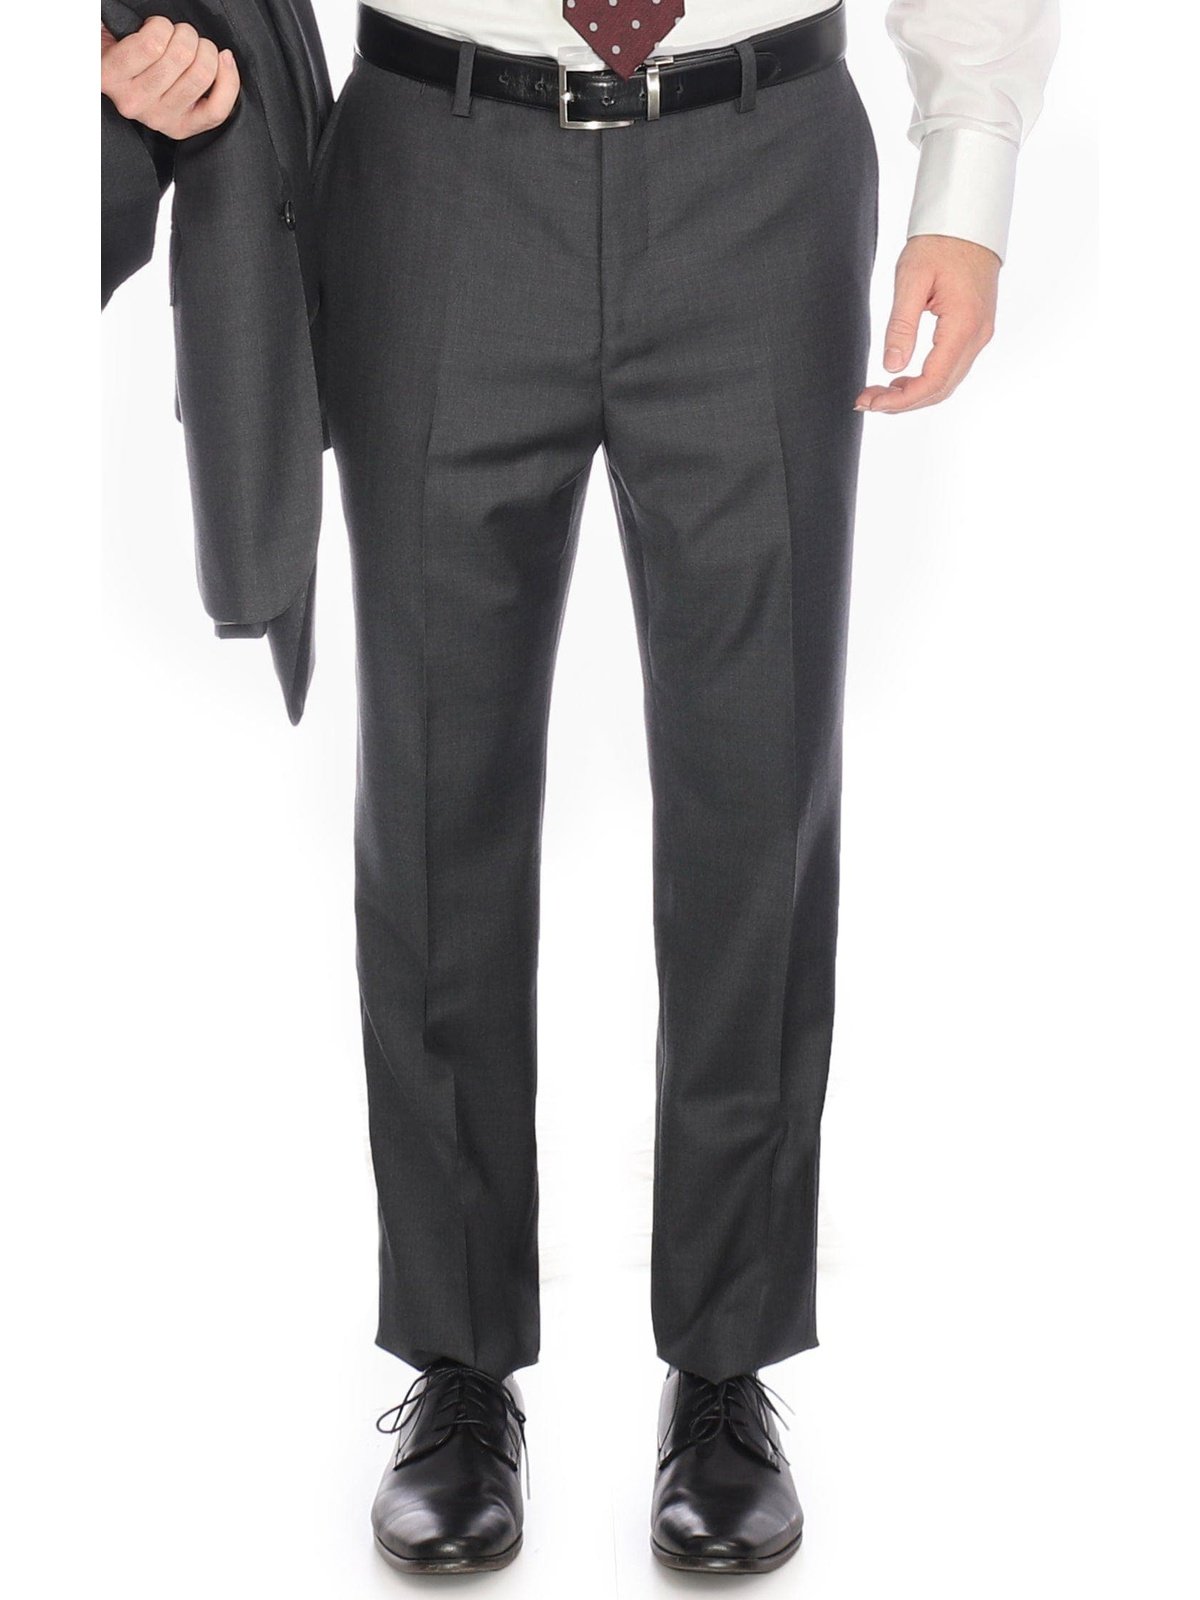 Blujacket Mens Charocal Gray 100% Wool Regular Fit 2 Piece Suit